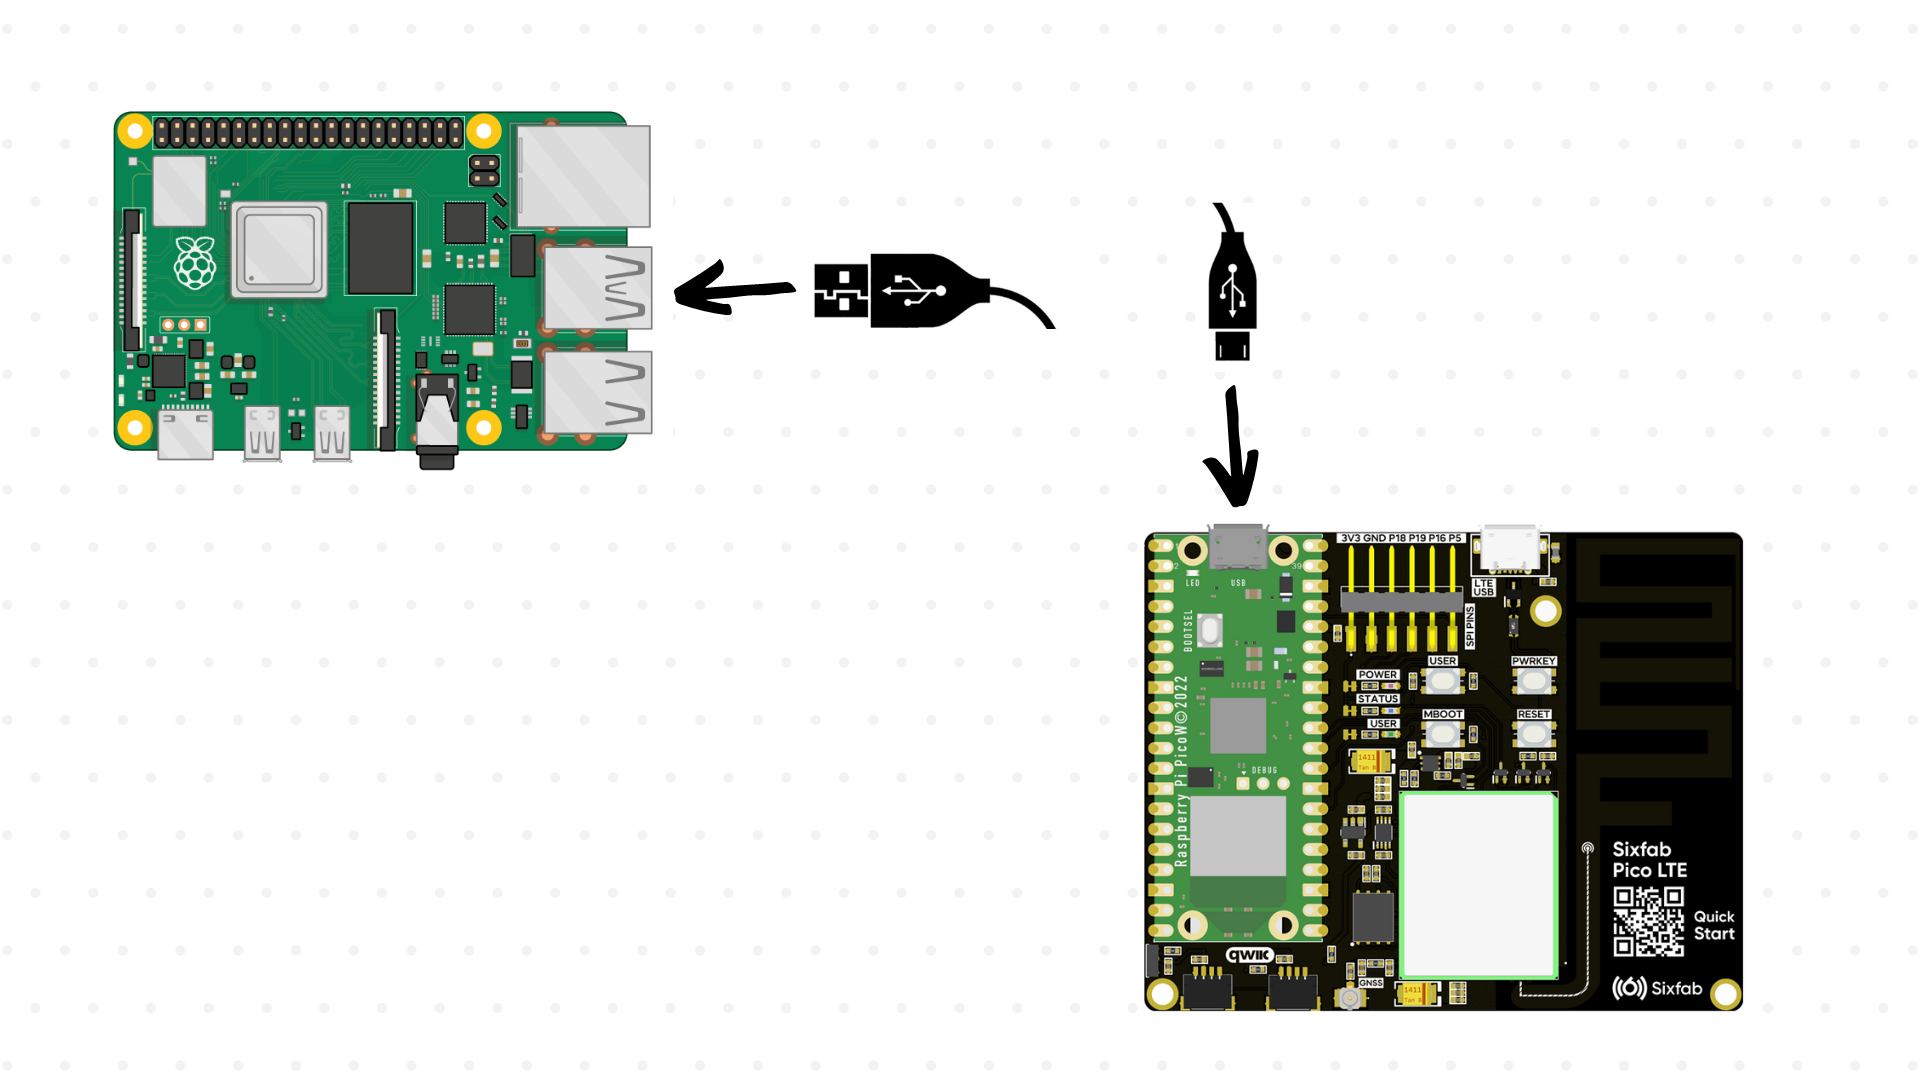 Connecting Sixfab Pico LTE board to Raspberry Pi via USB